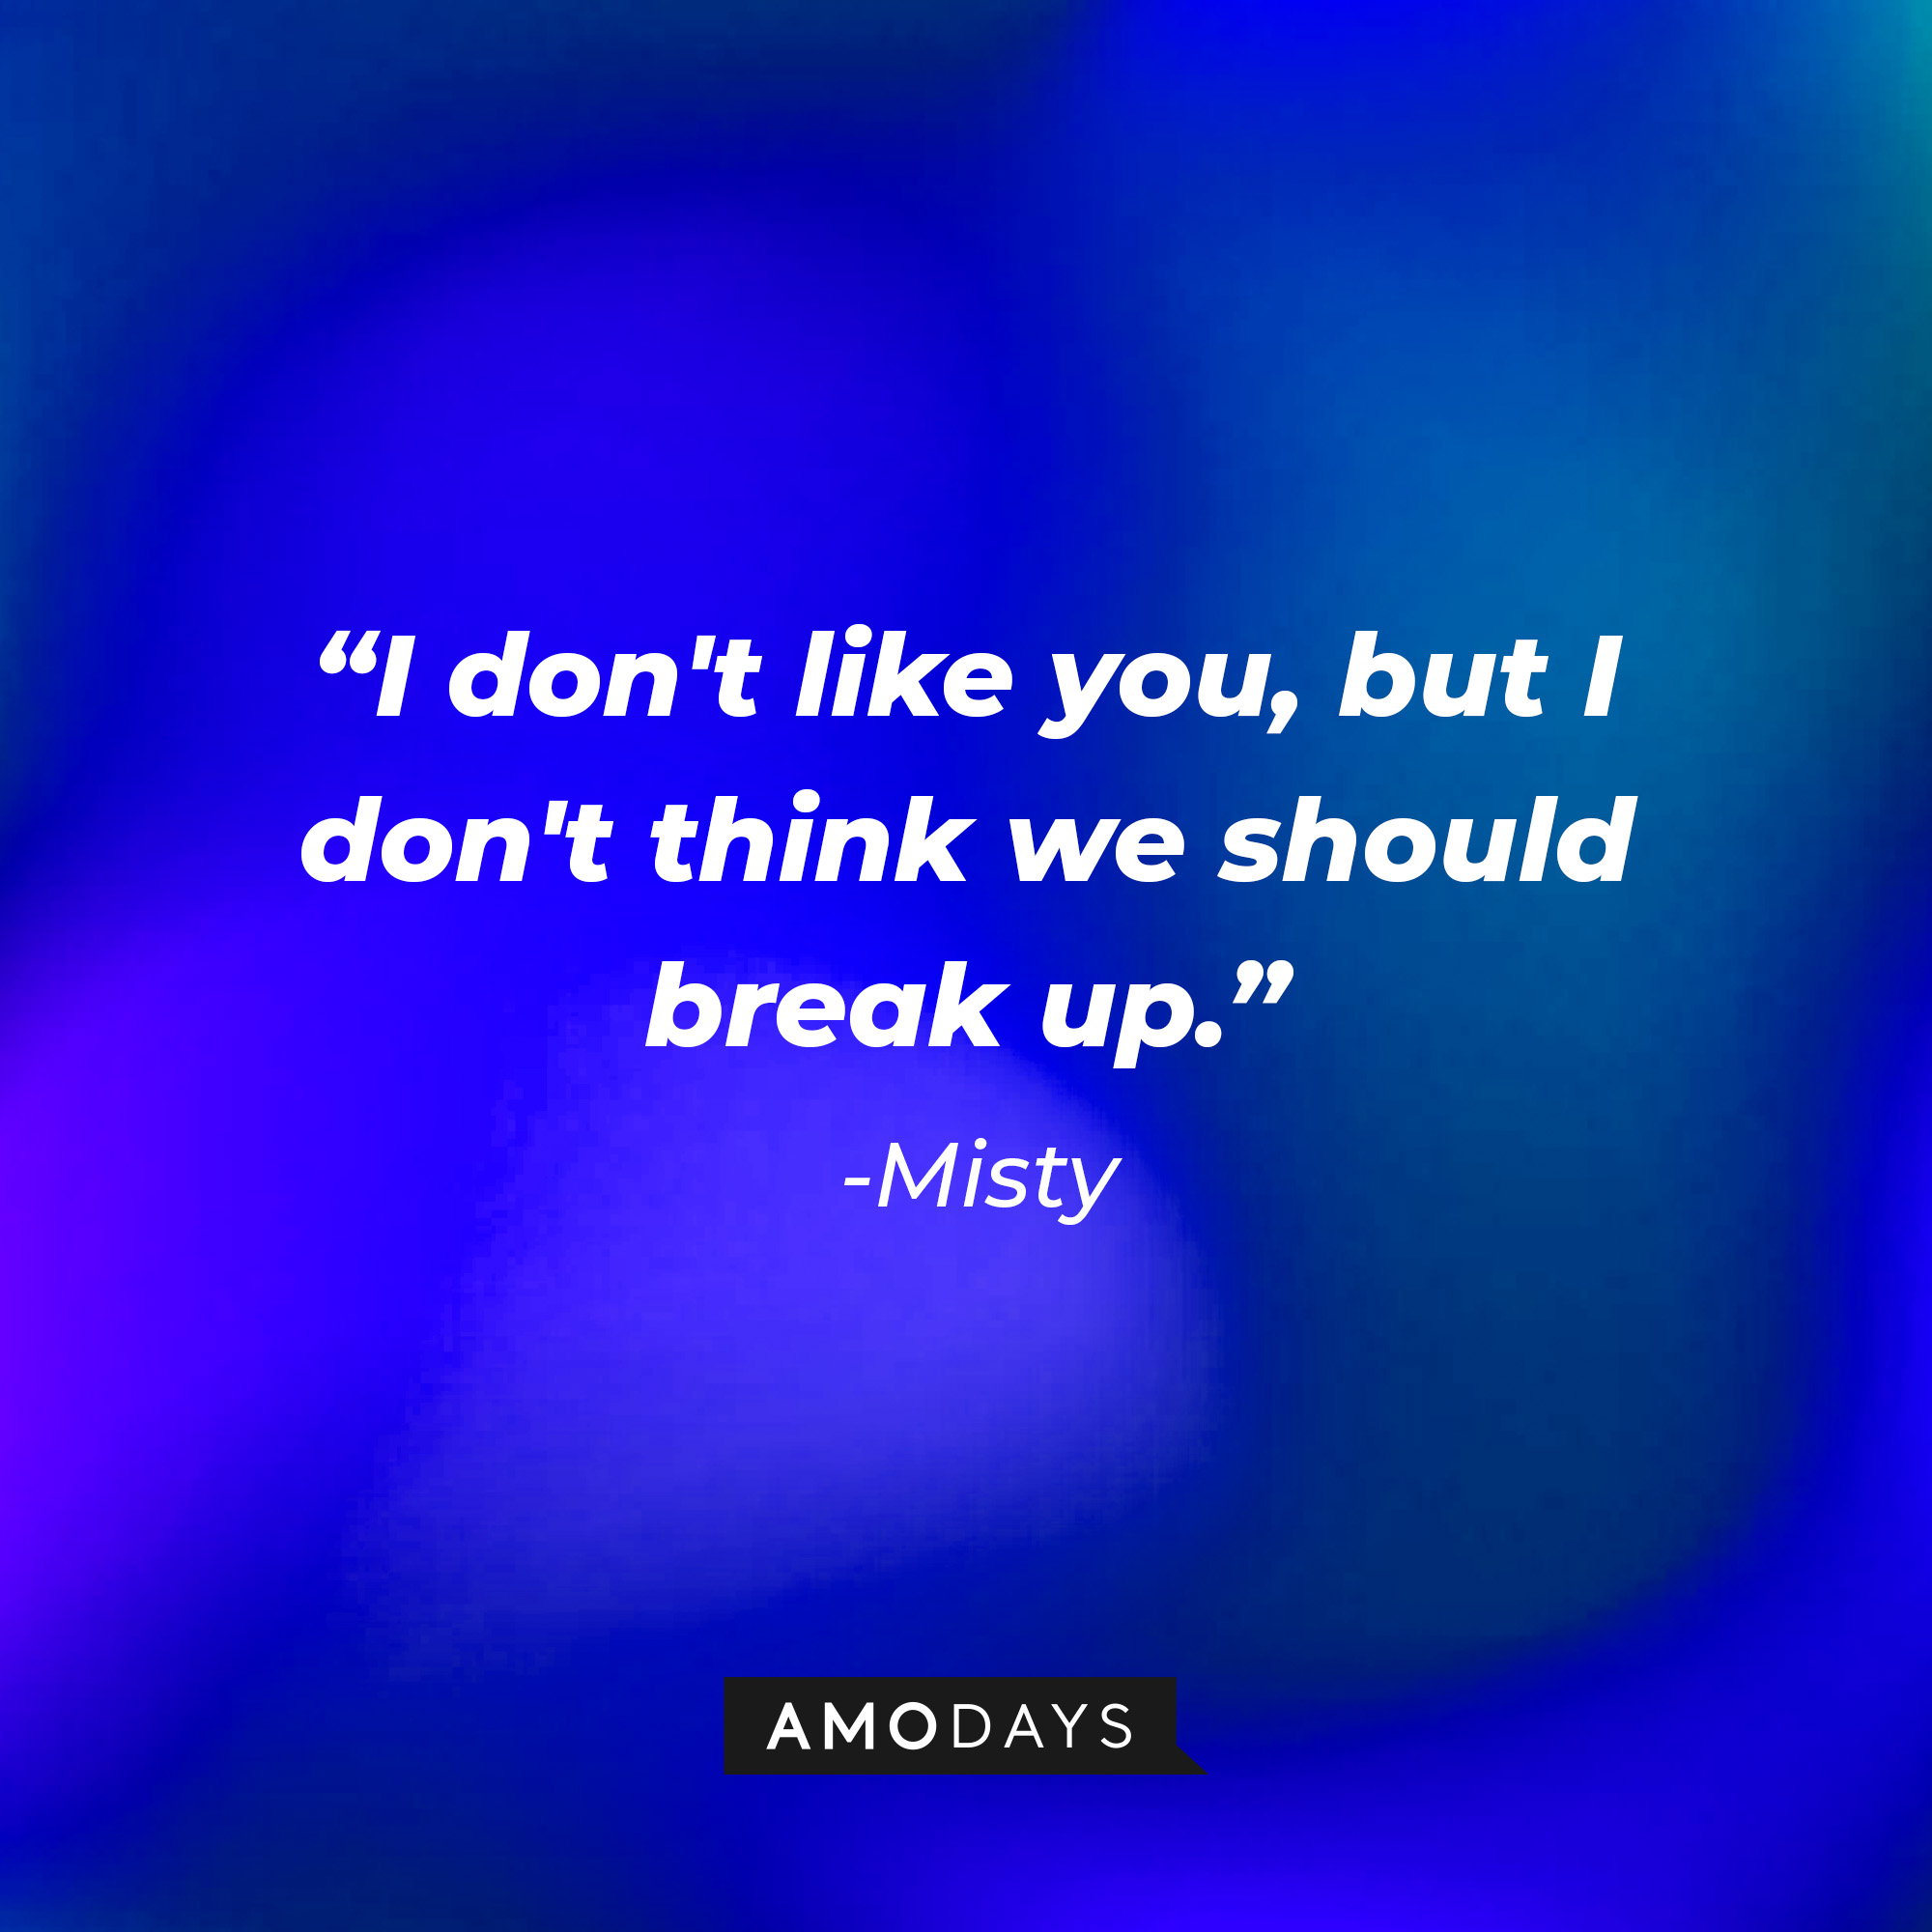 Pia’s quote: “I don't like you, but I don't think we should break up.” │Source: AmoDays